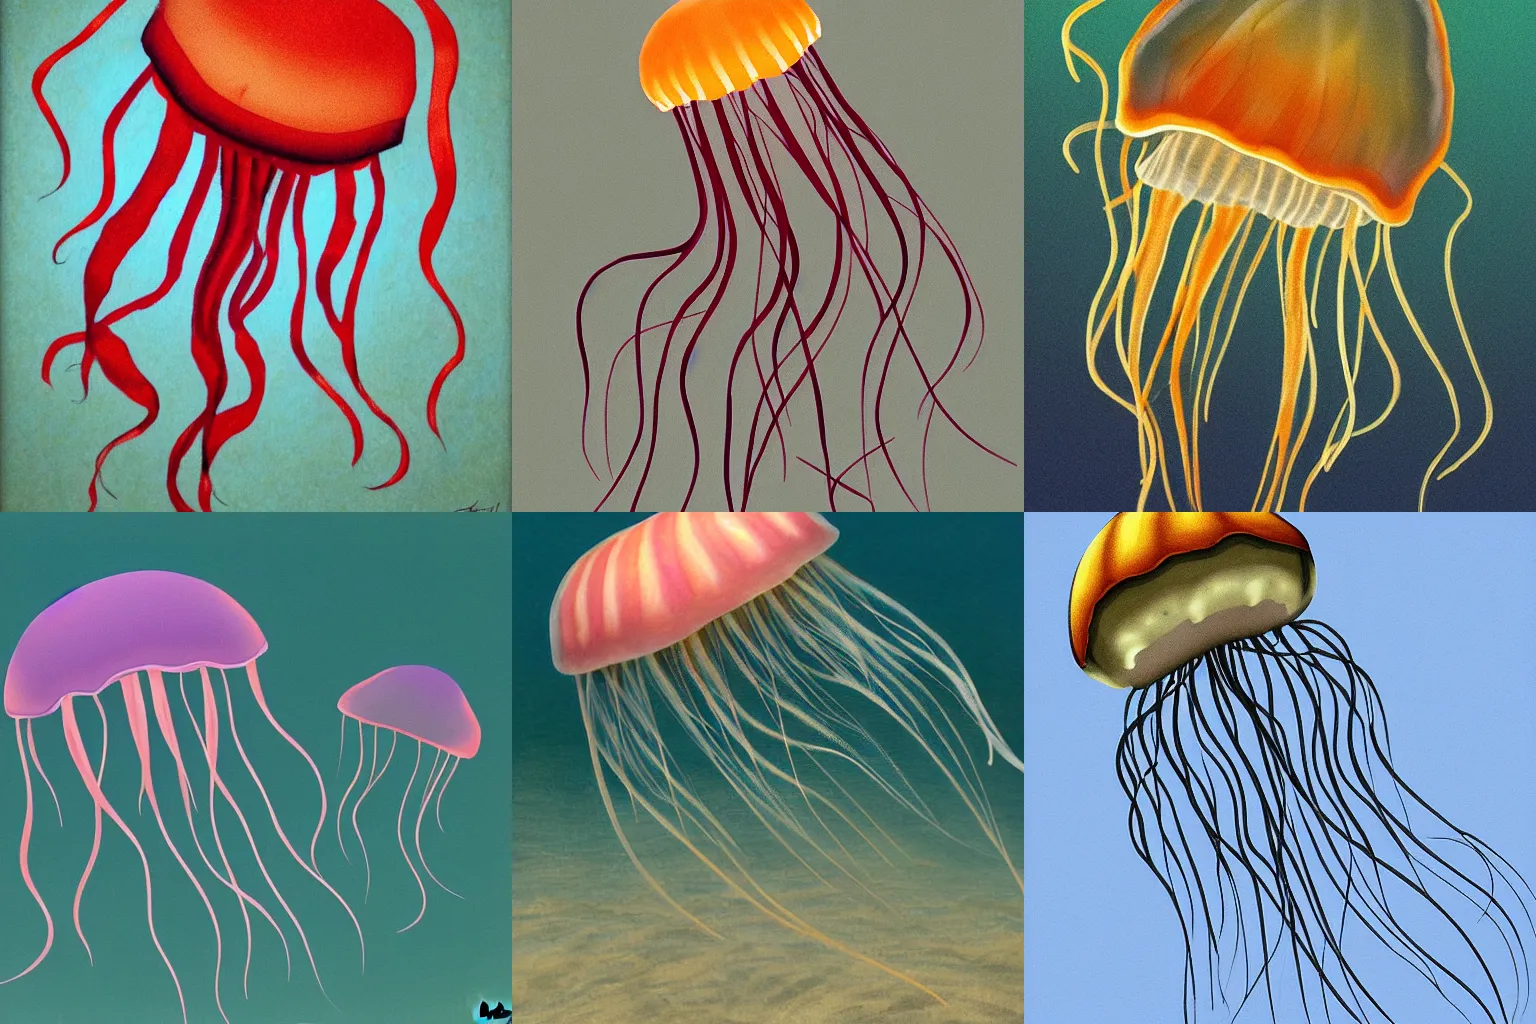 Prompt: jellyfish by John Berkley